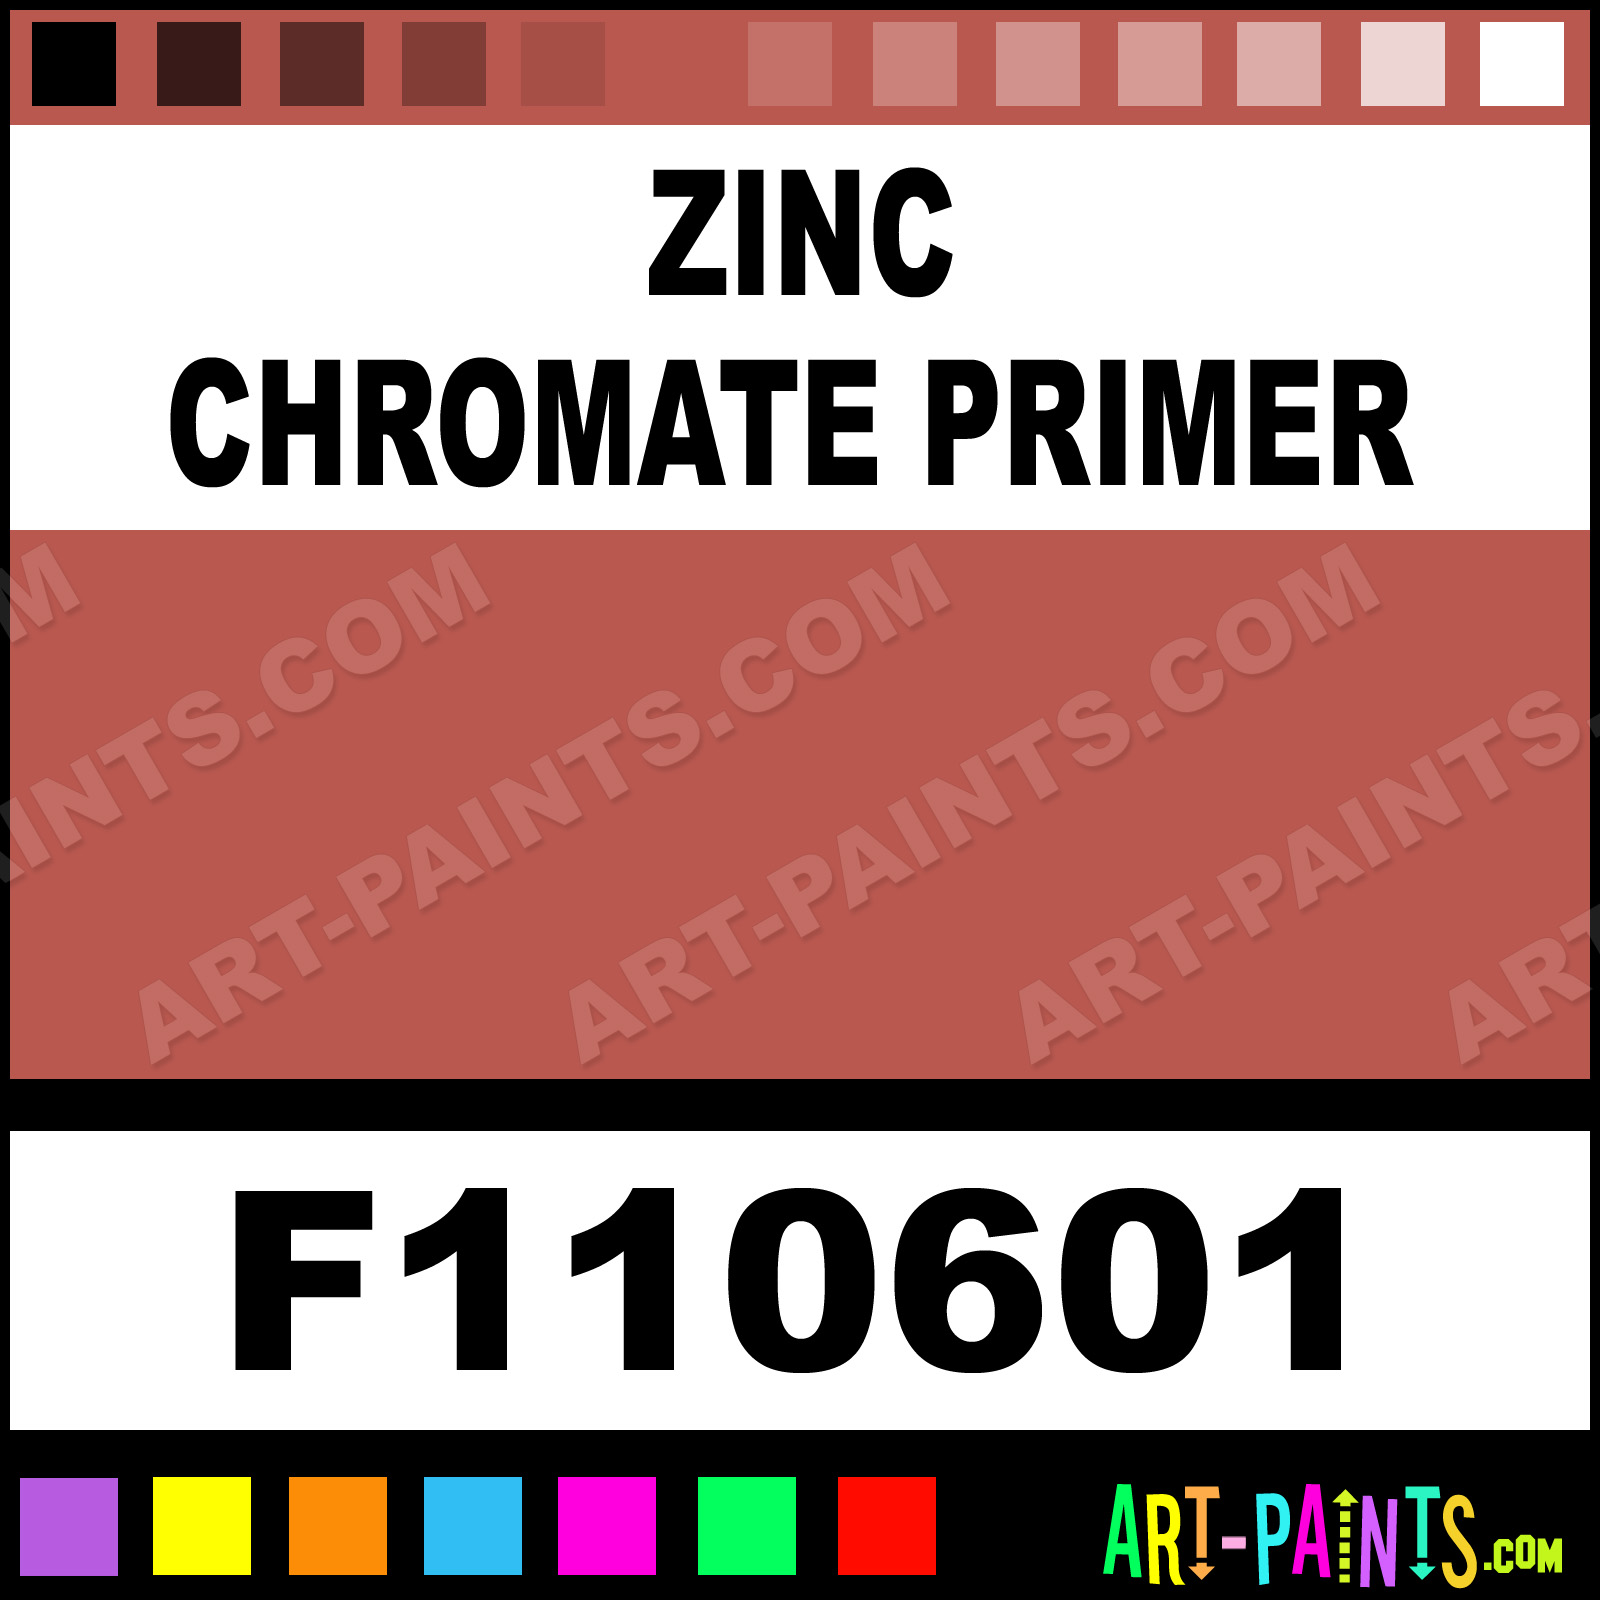 File:Zinc chromate primer.jpg - Wikipedia